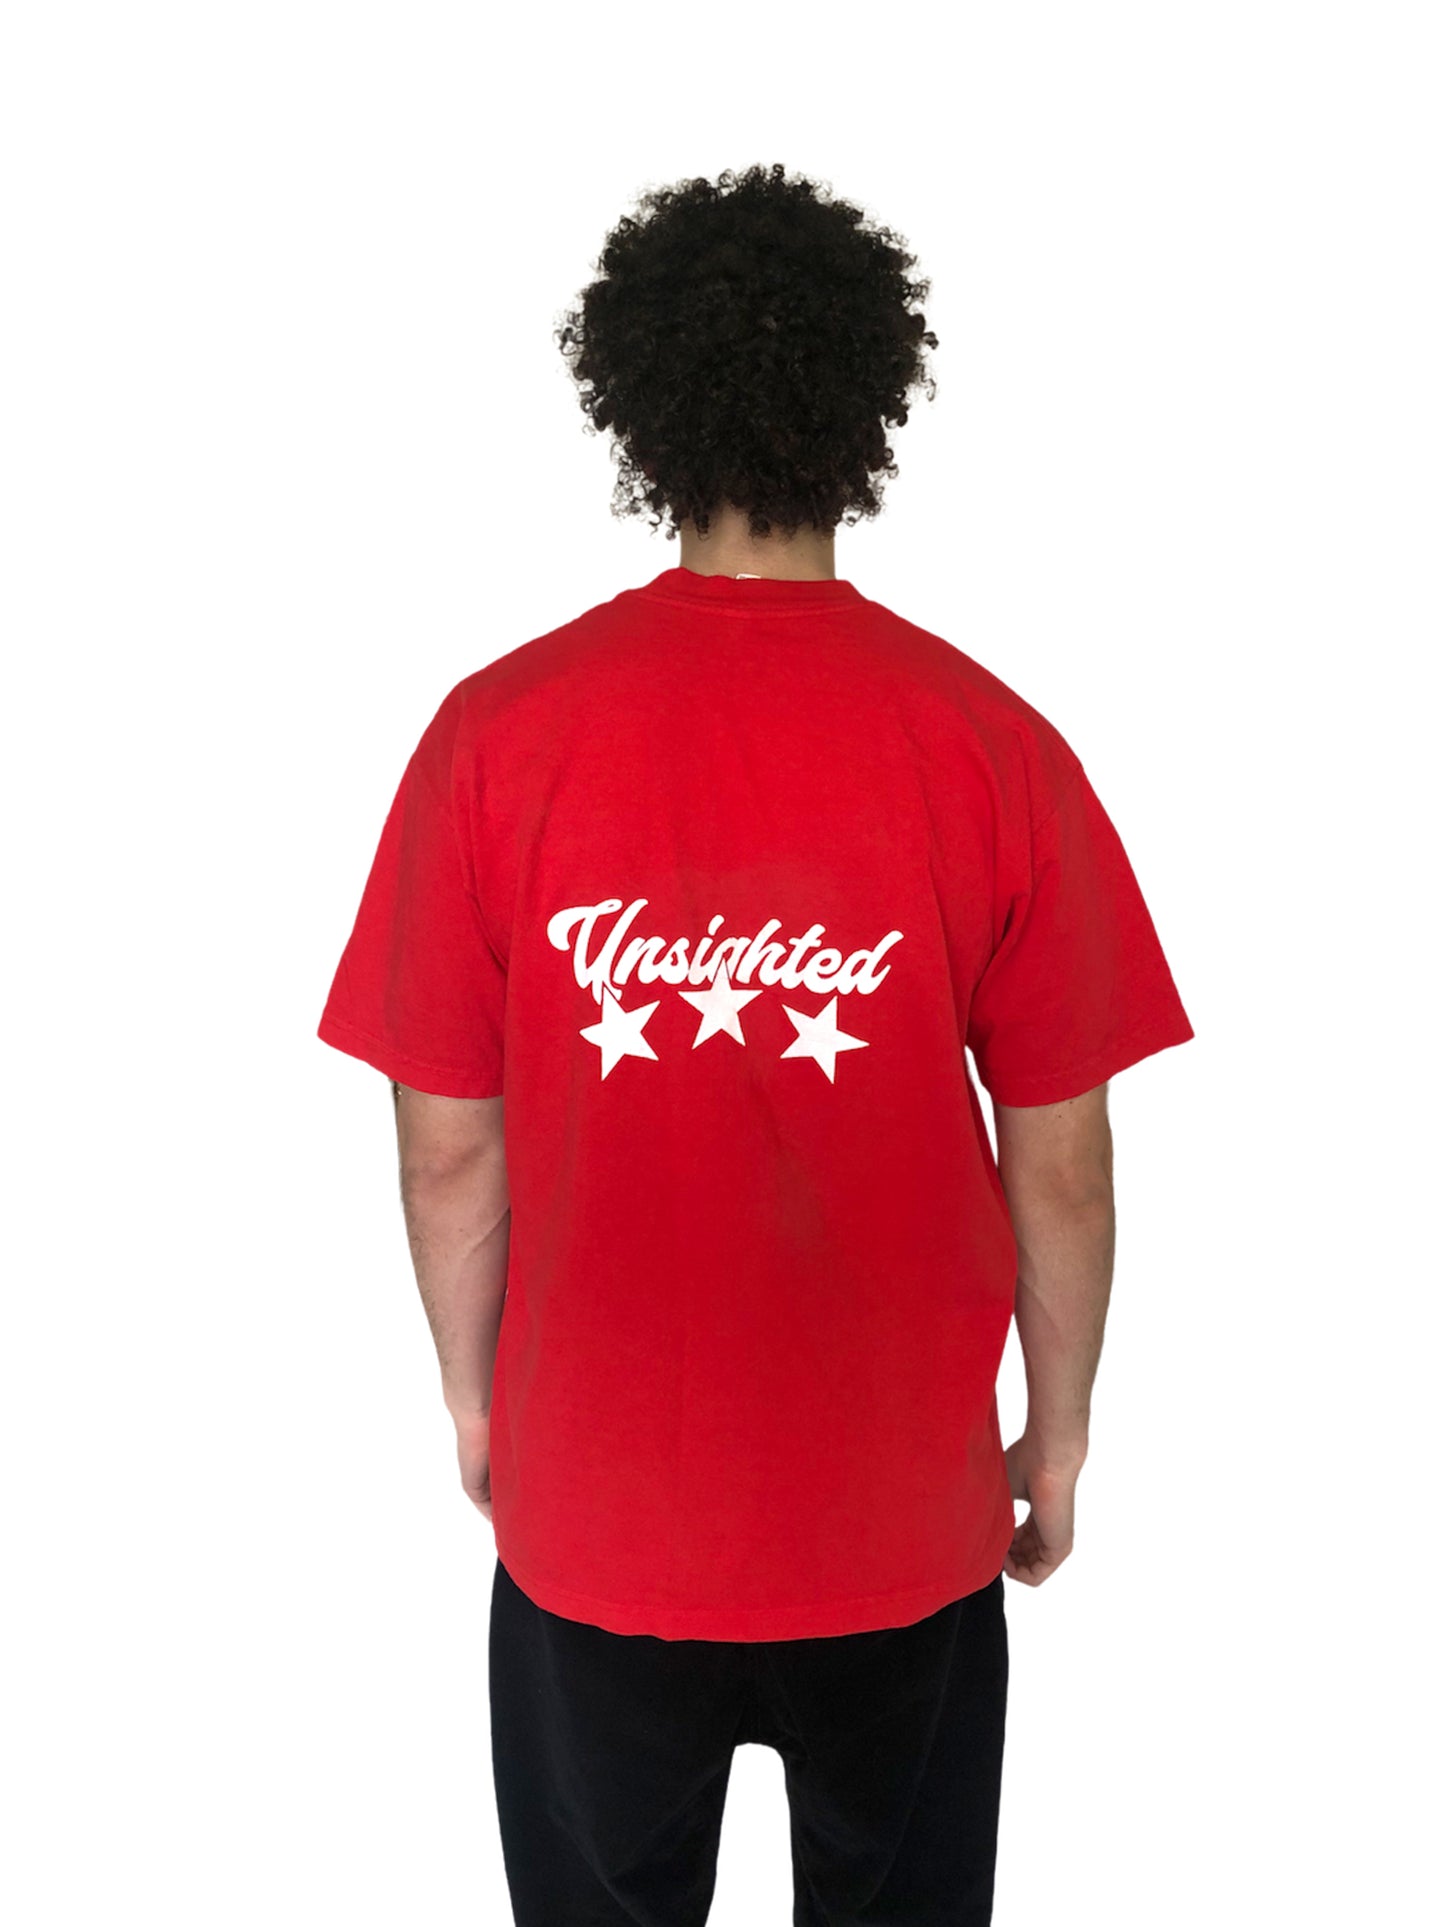 Vintage Red Star T-Shirt